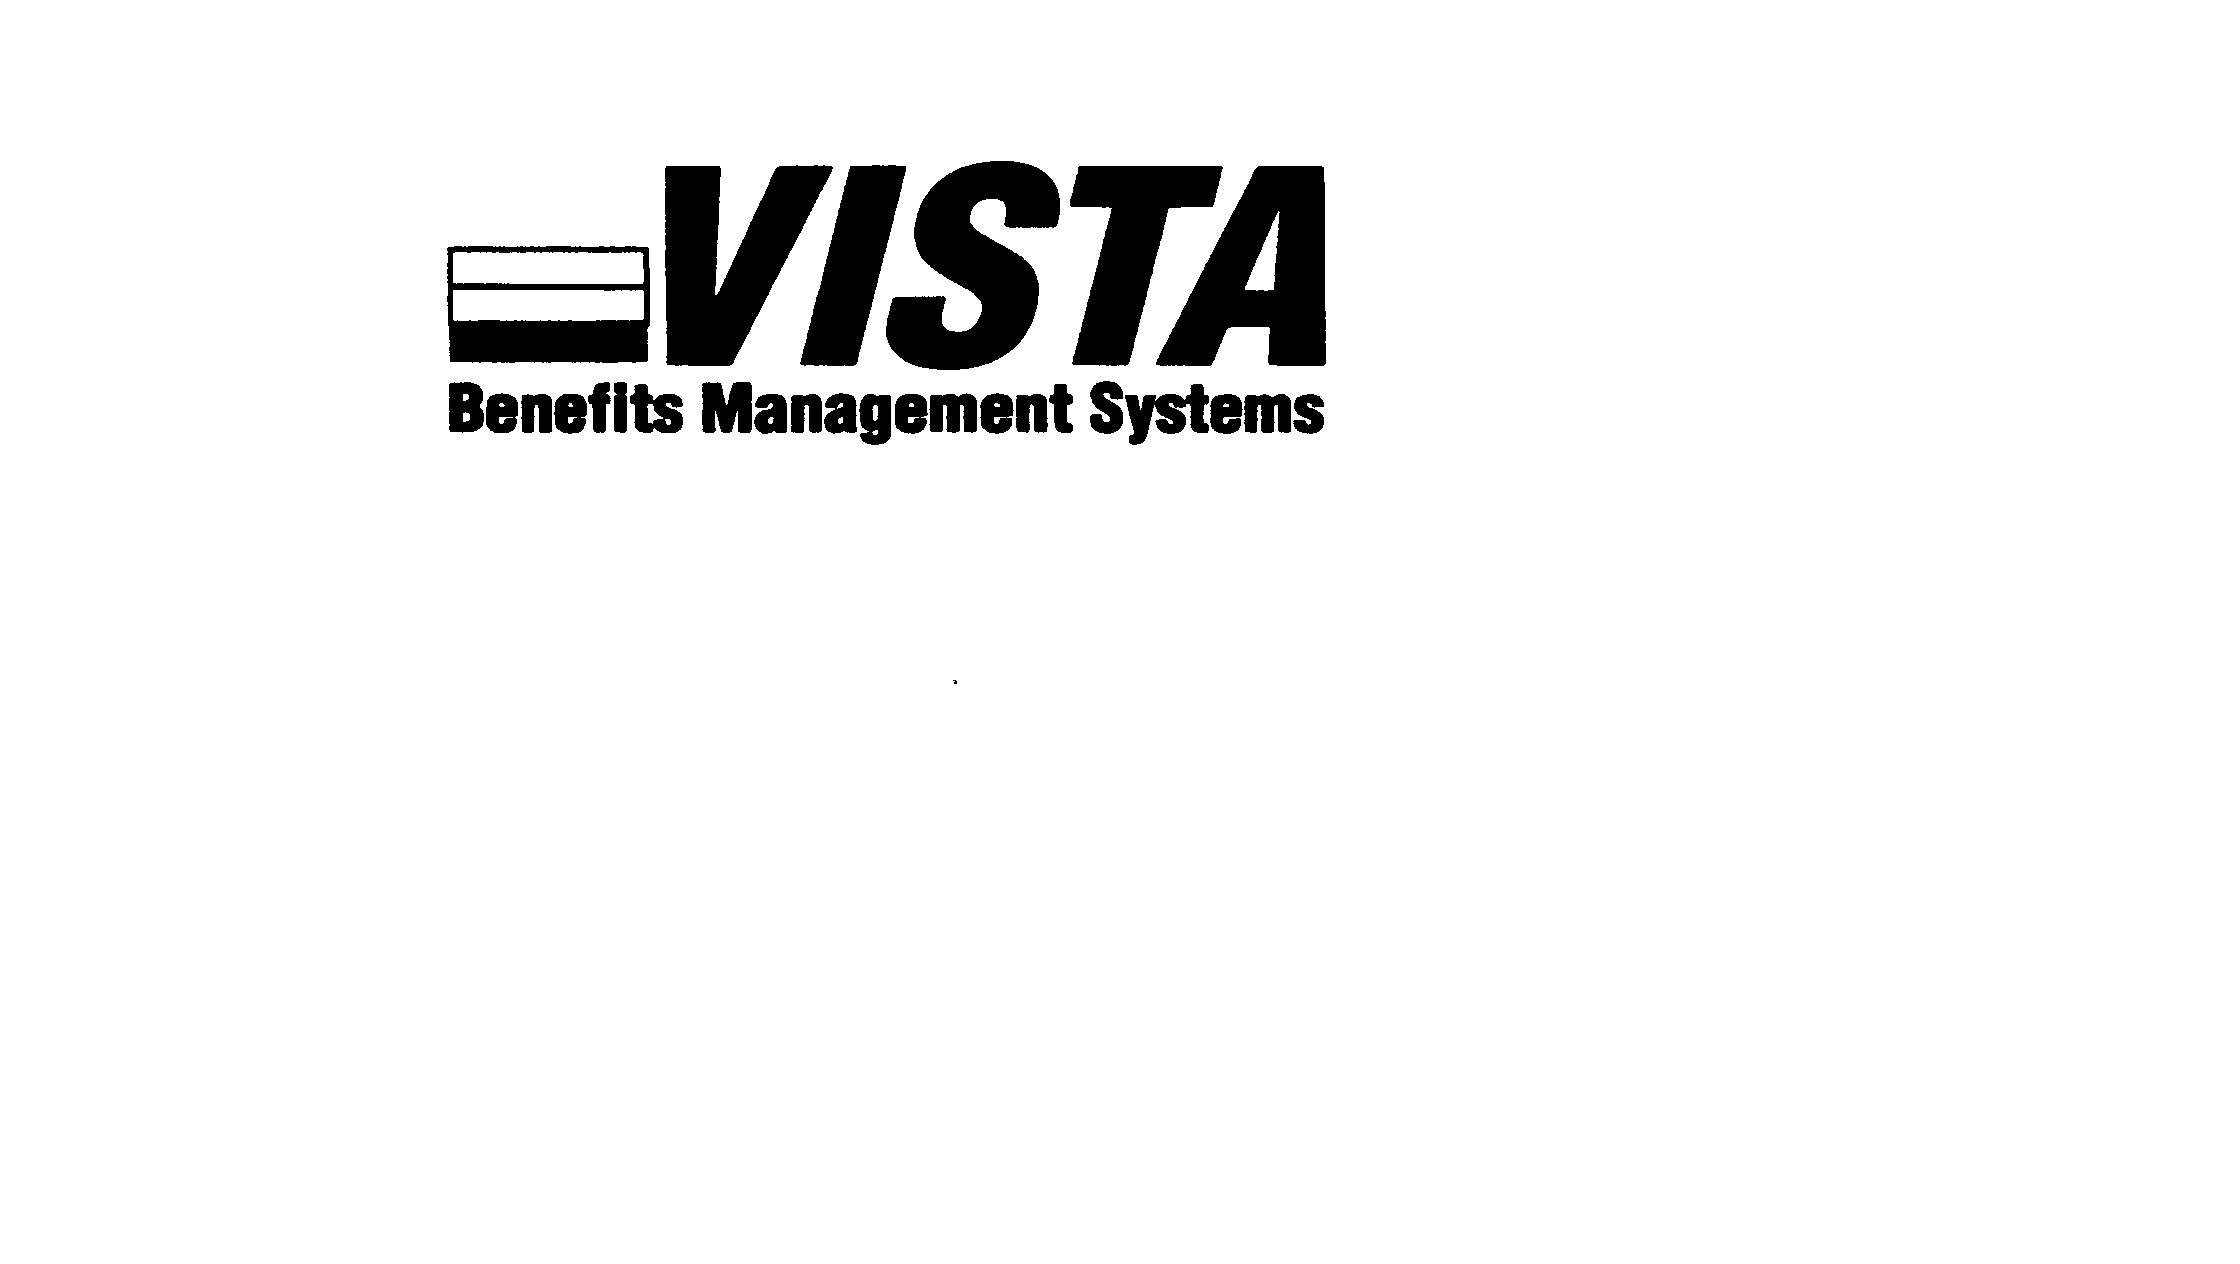  VISTA BENEFITS MANAGEMENT SYSTEMS